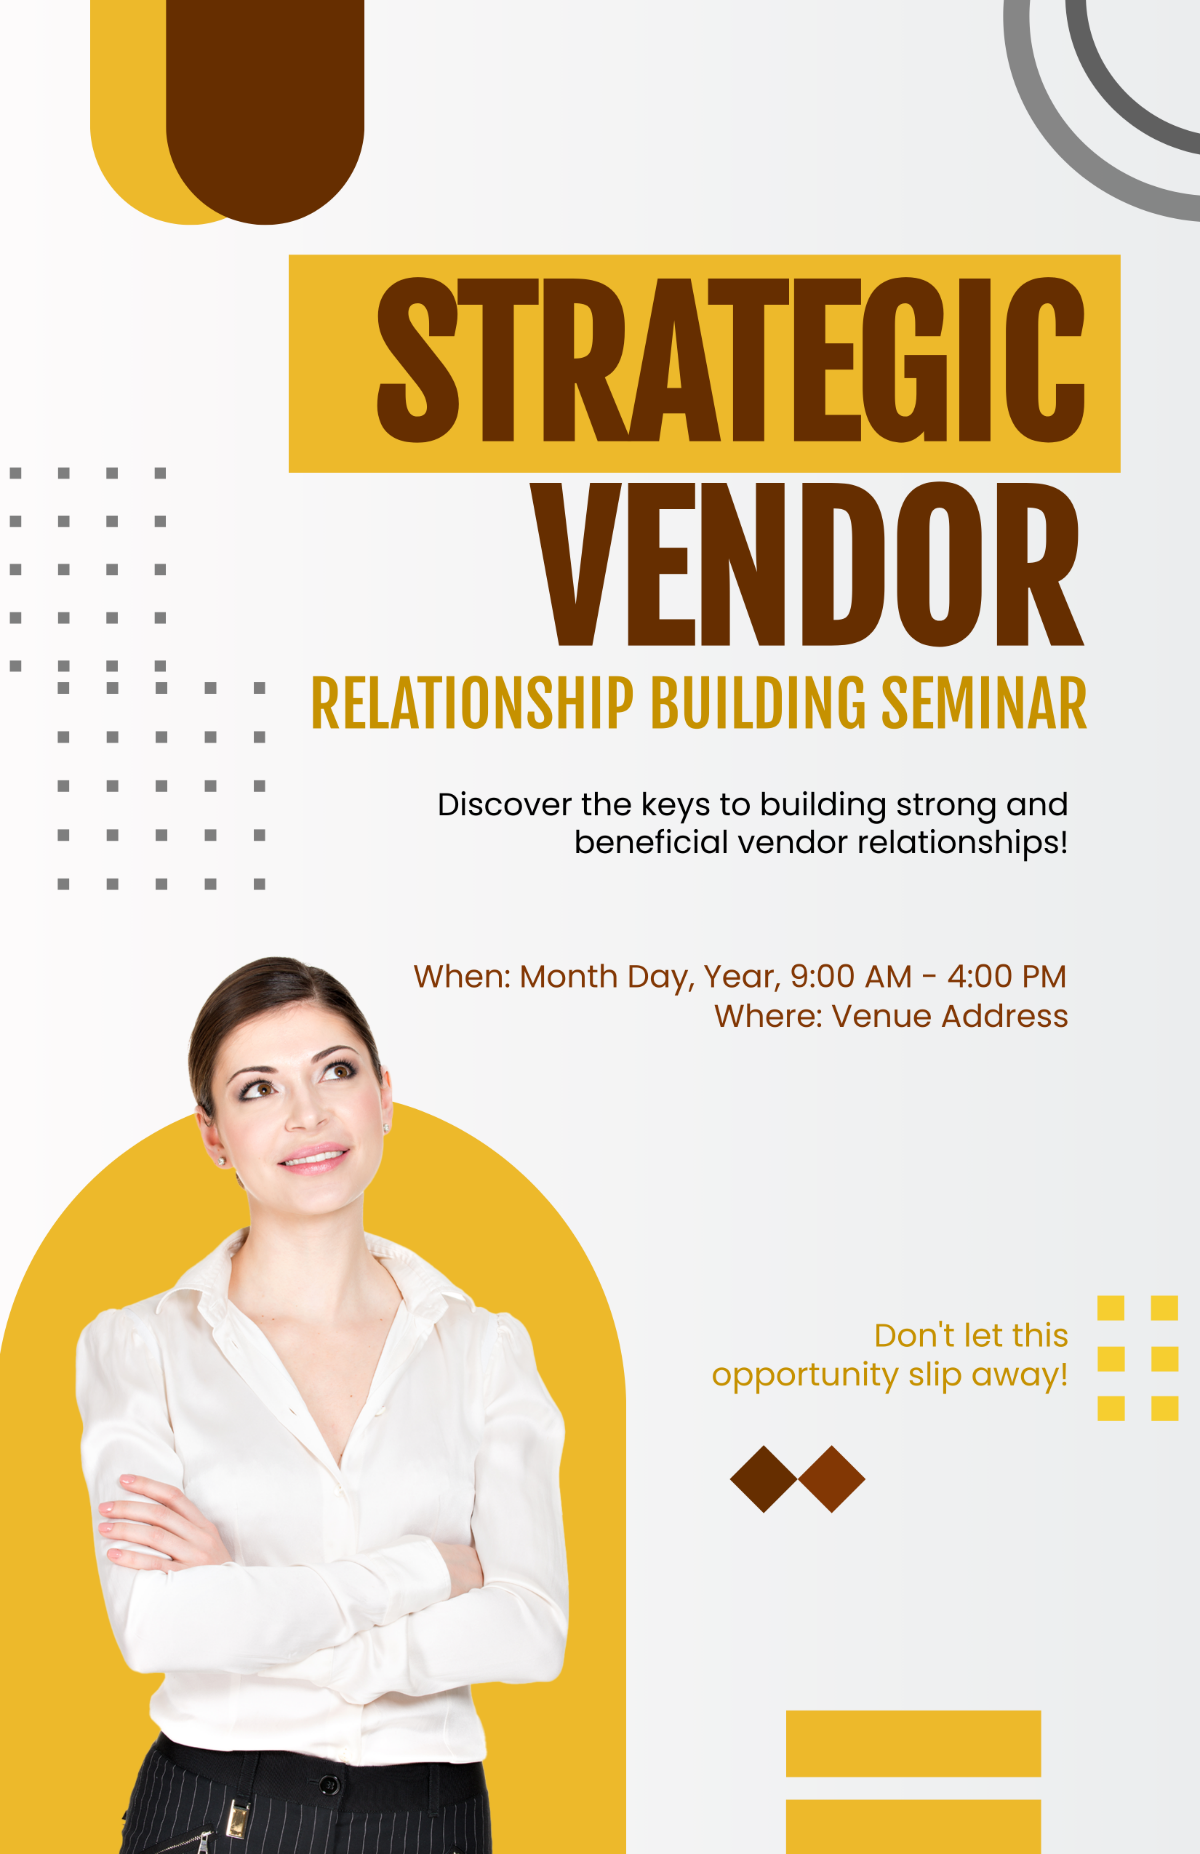 Strategic Vendor Relationship Building Seminar Poster Template